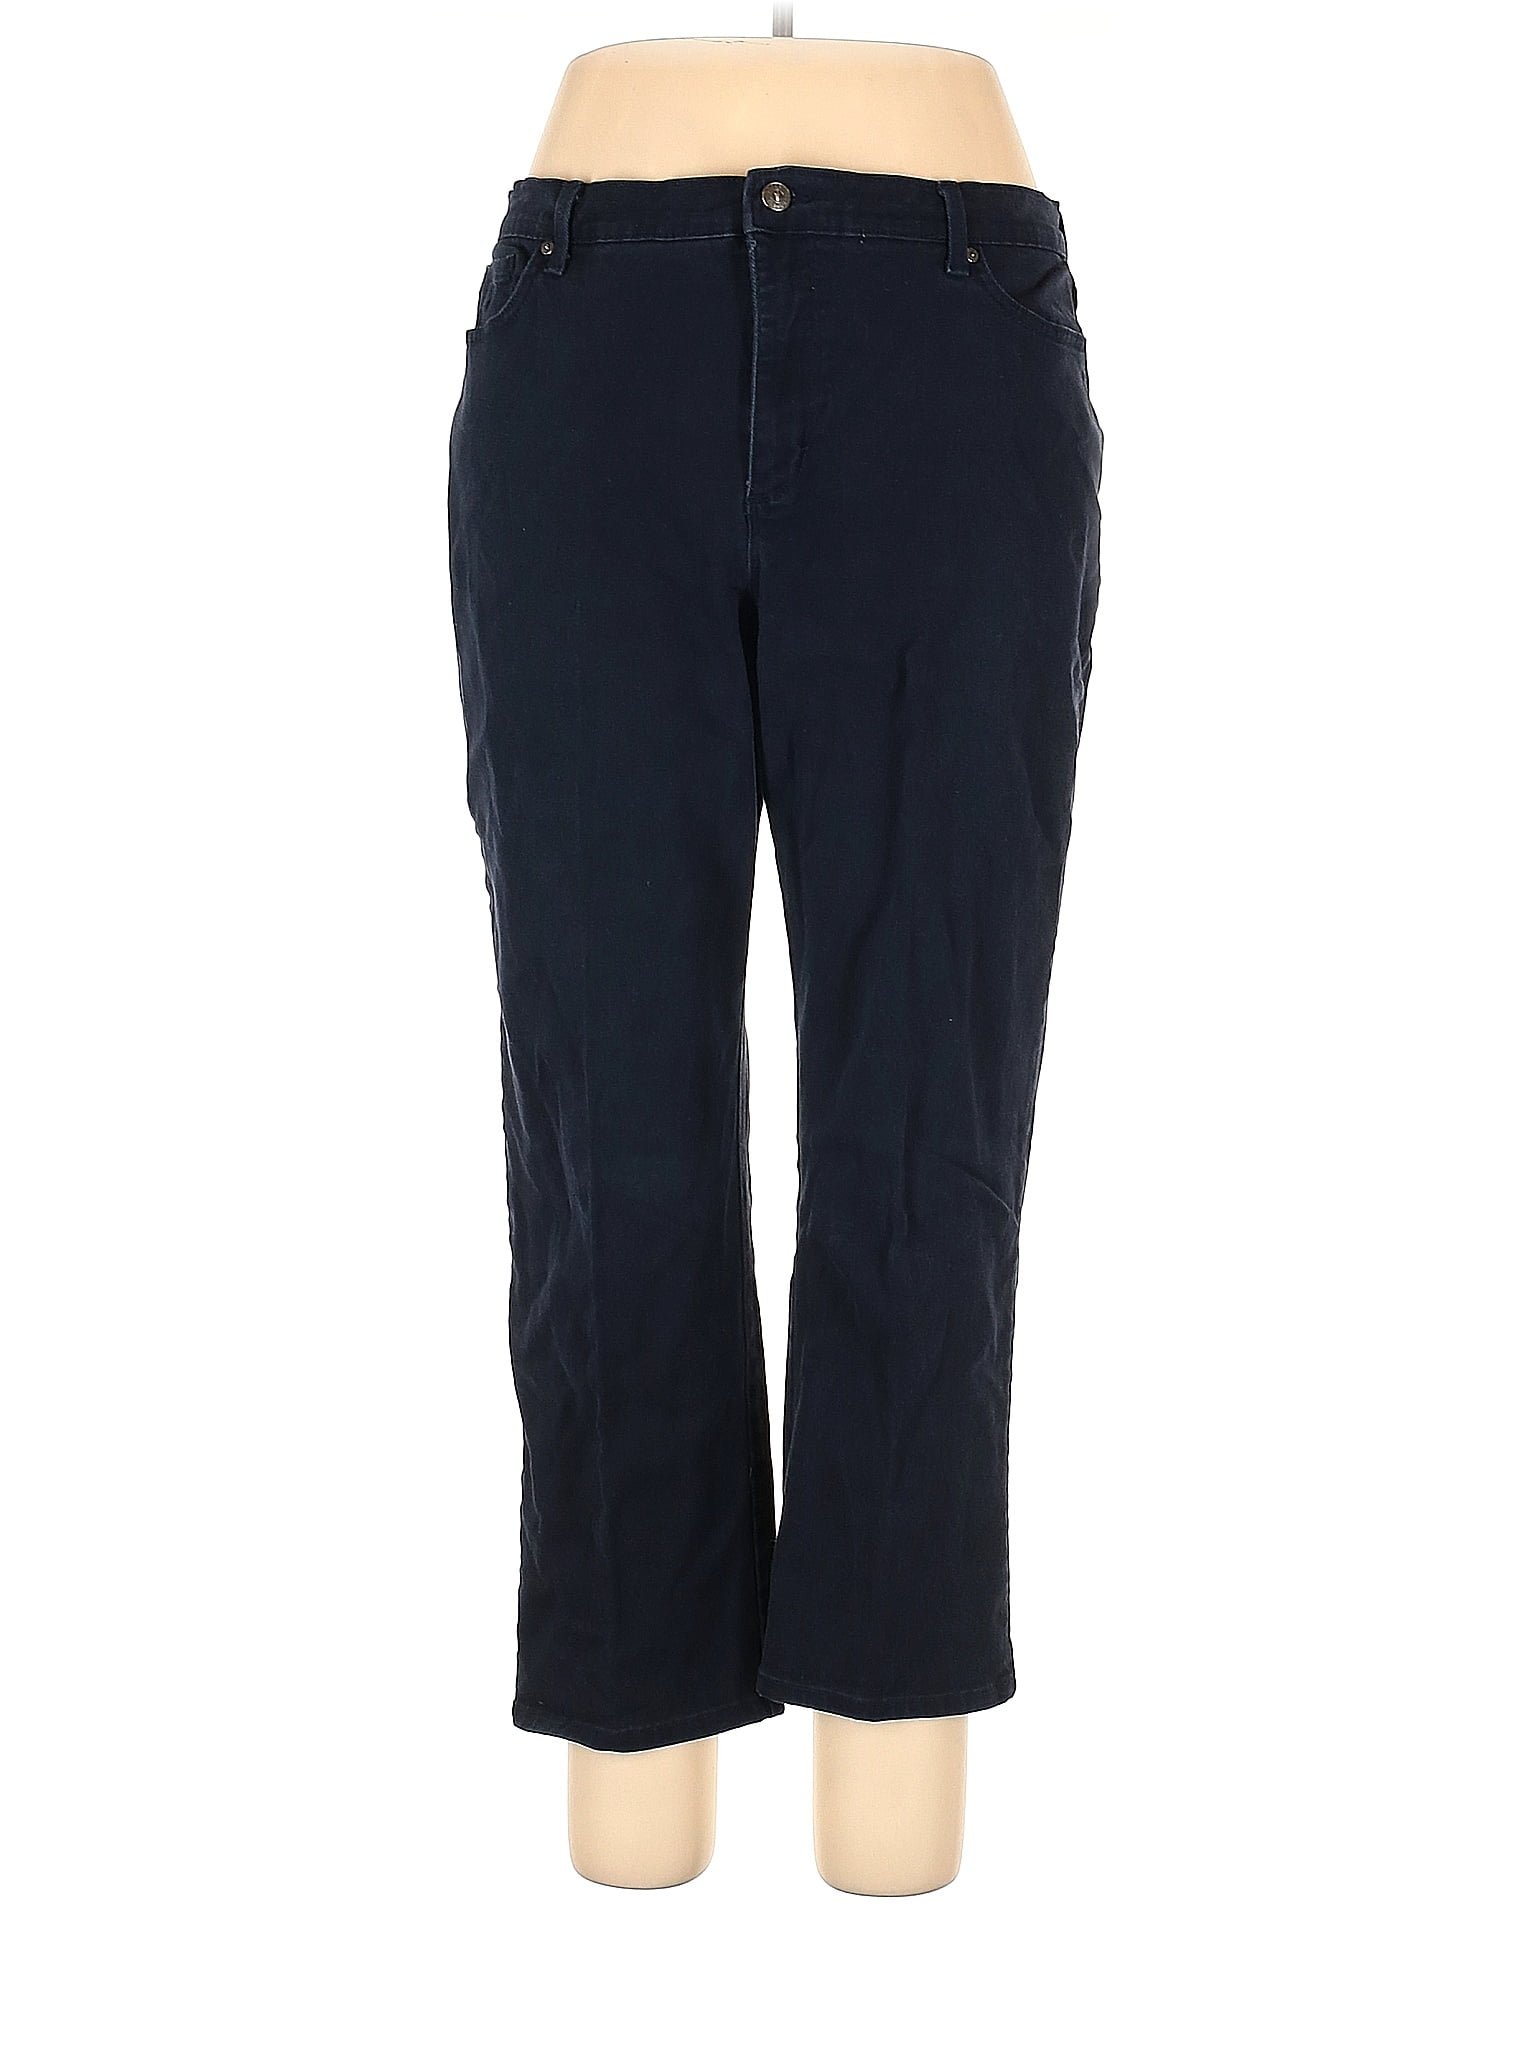 Gloria Vanderbilt Solid Blue Jeans Size 16 - 62% off | thredUP